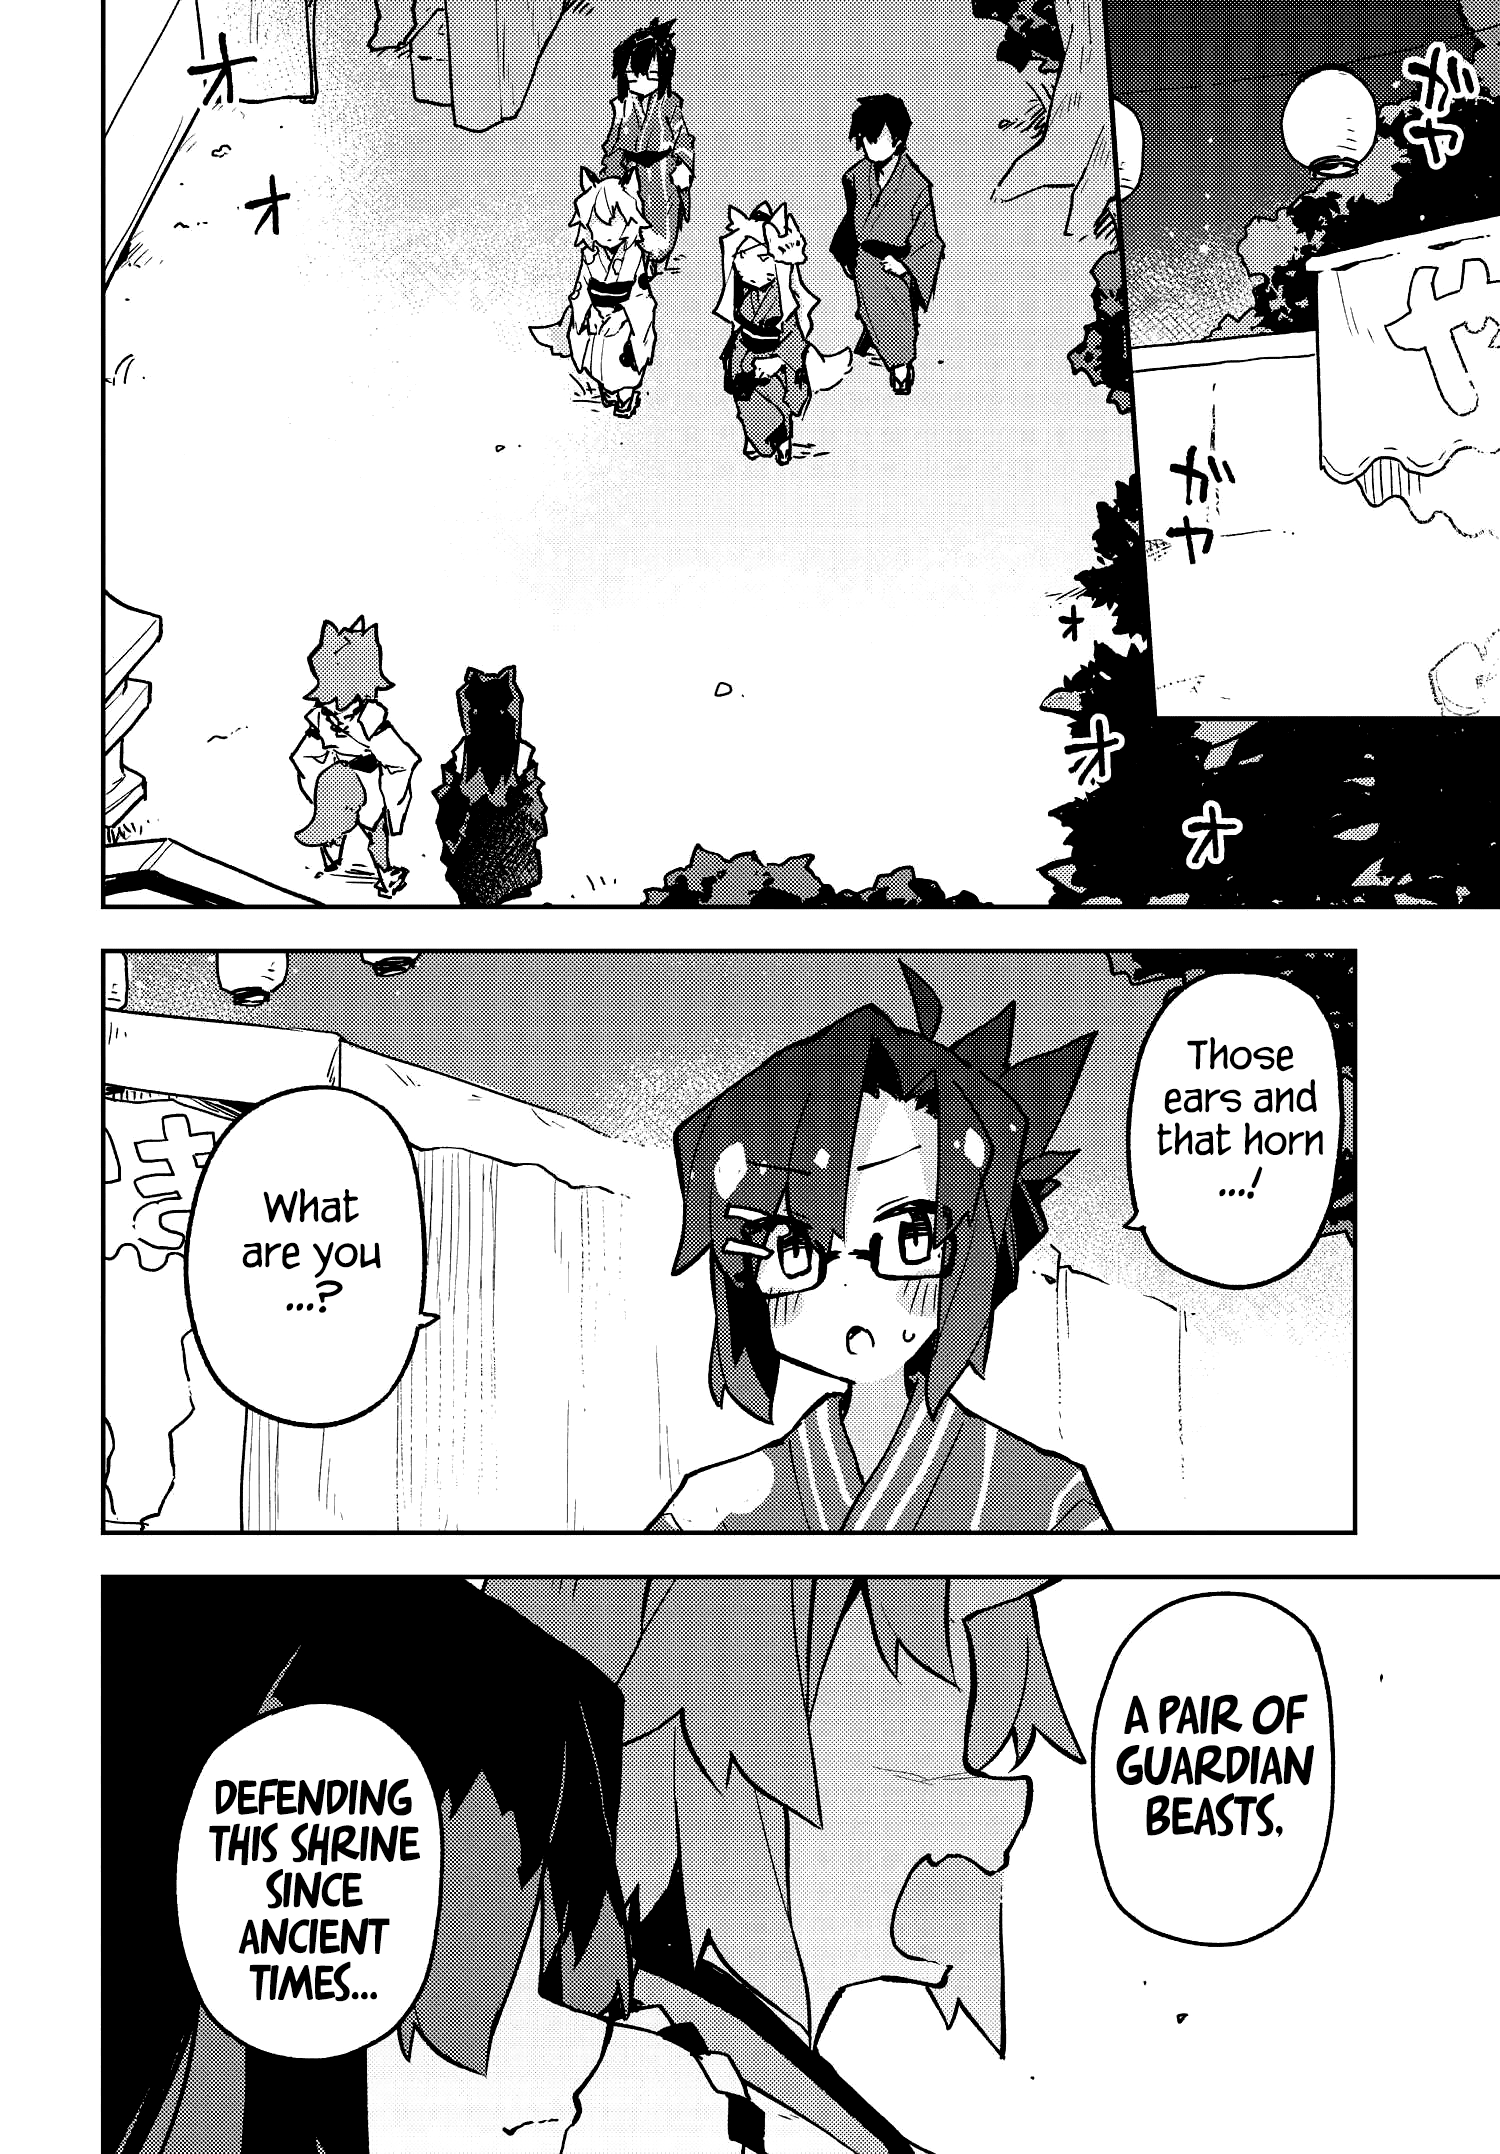 Sewayaki Kitsune No Senko-San - Page 2